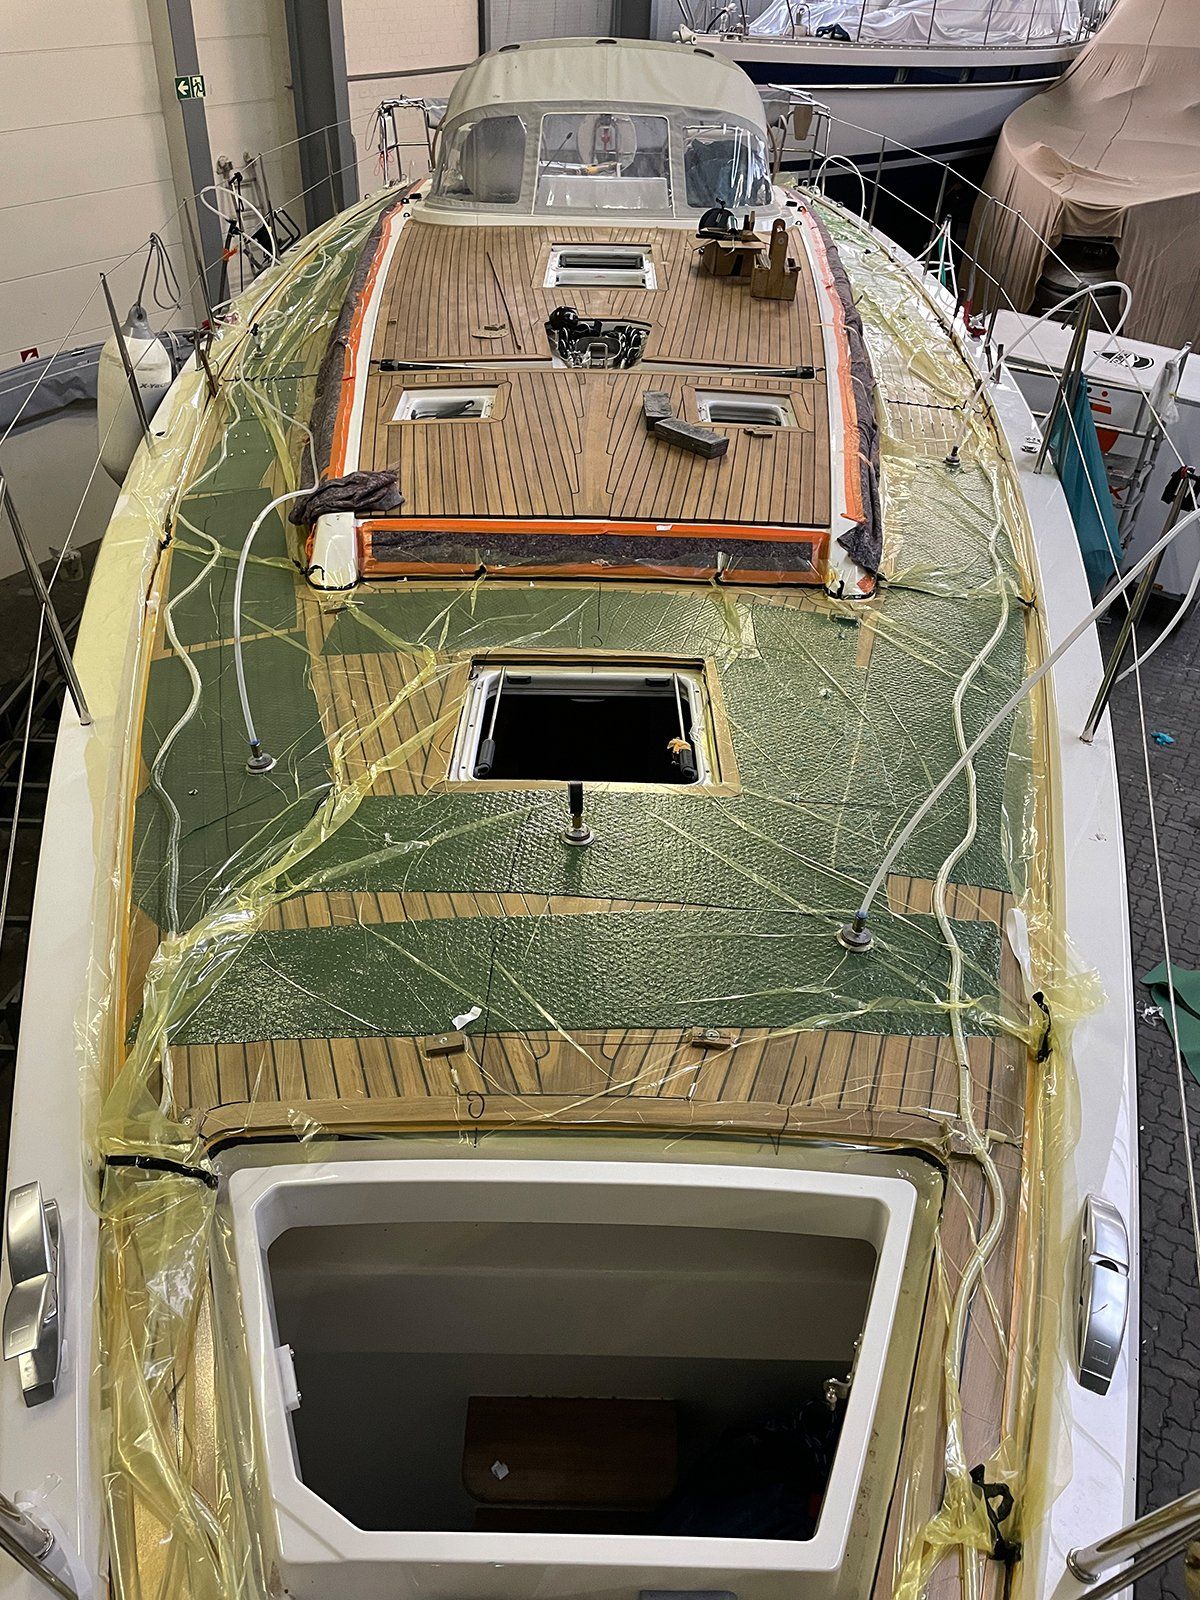 Vacuum bonding of a teak deck on an X-Yacht sailing yacht by Mobilerbootsbau teak decking company